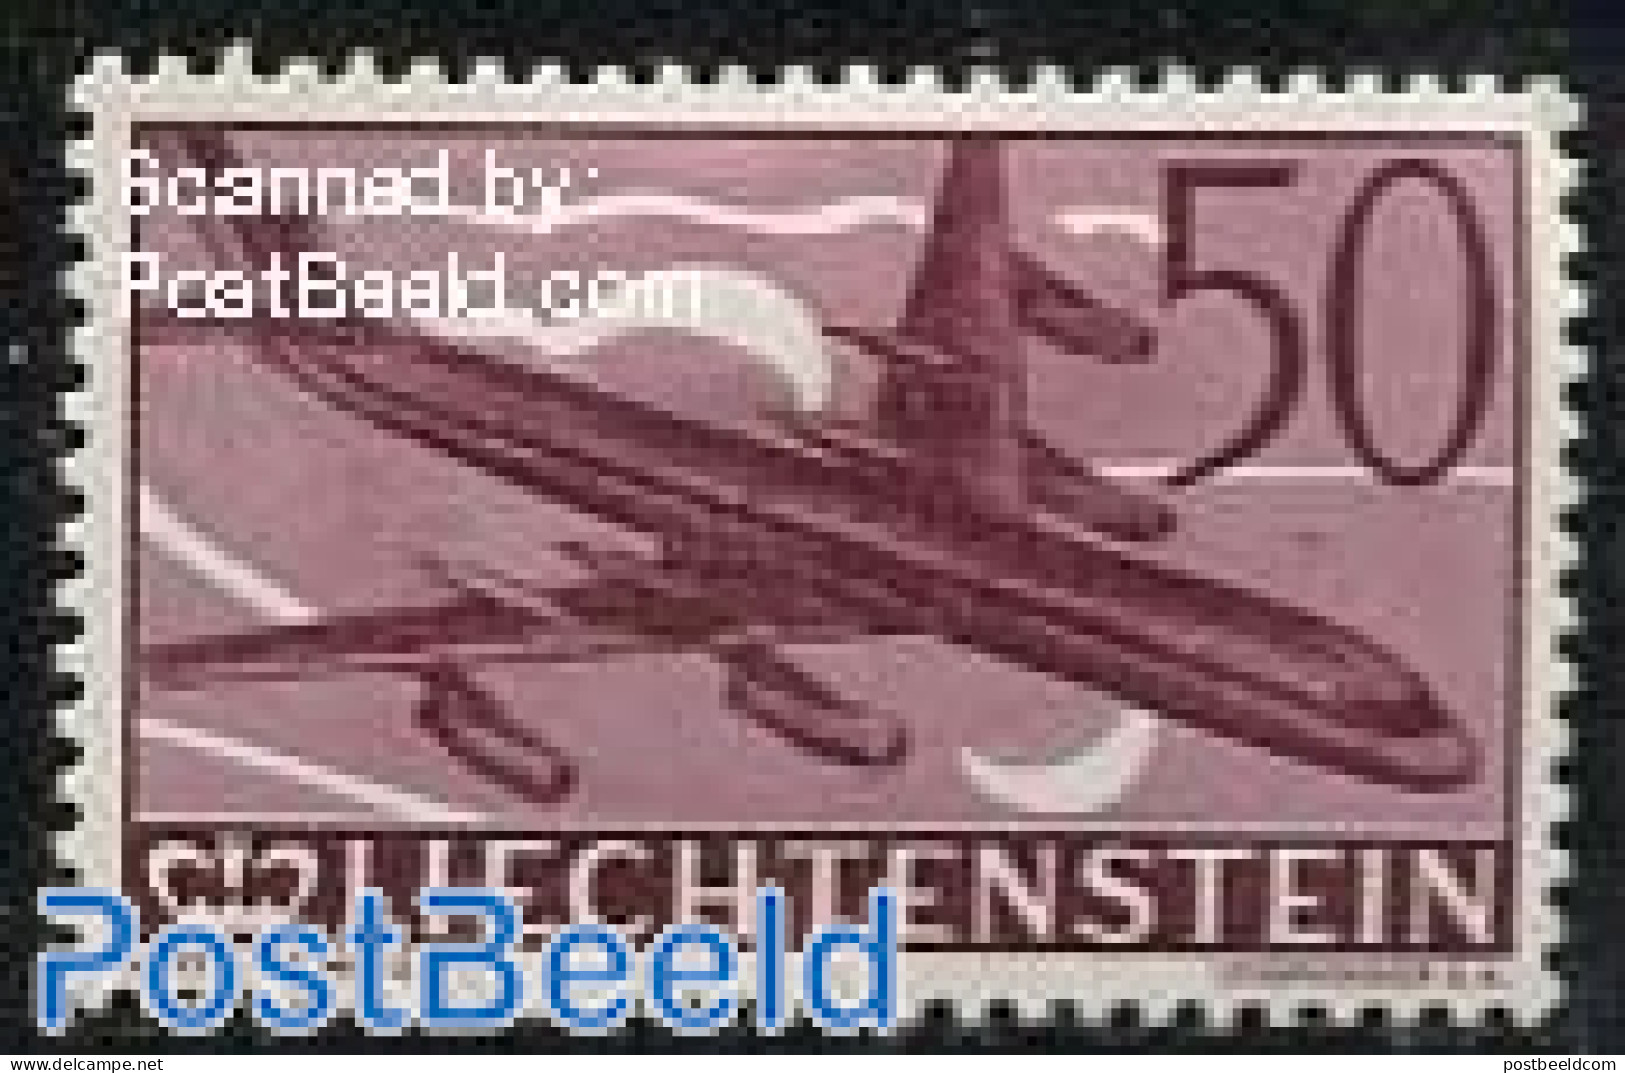 Liechtenstein 1960 50Rp, Stamp Out Of Set, Unused (hinged), Transport - Aircraft & Aviation - Neufs